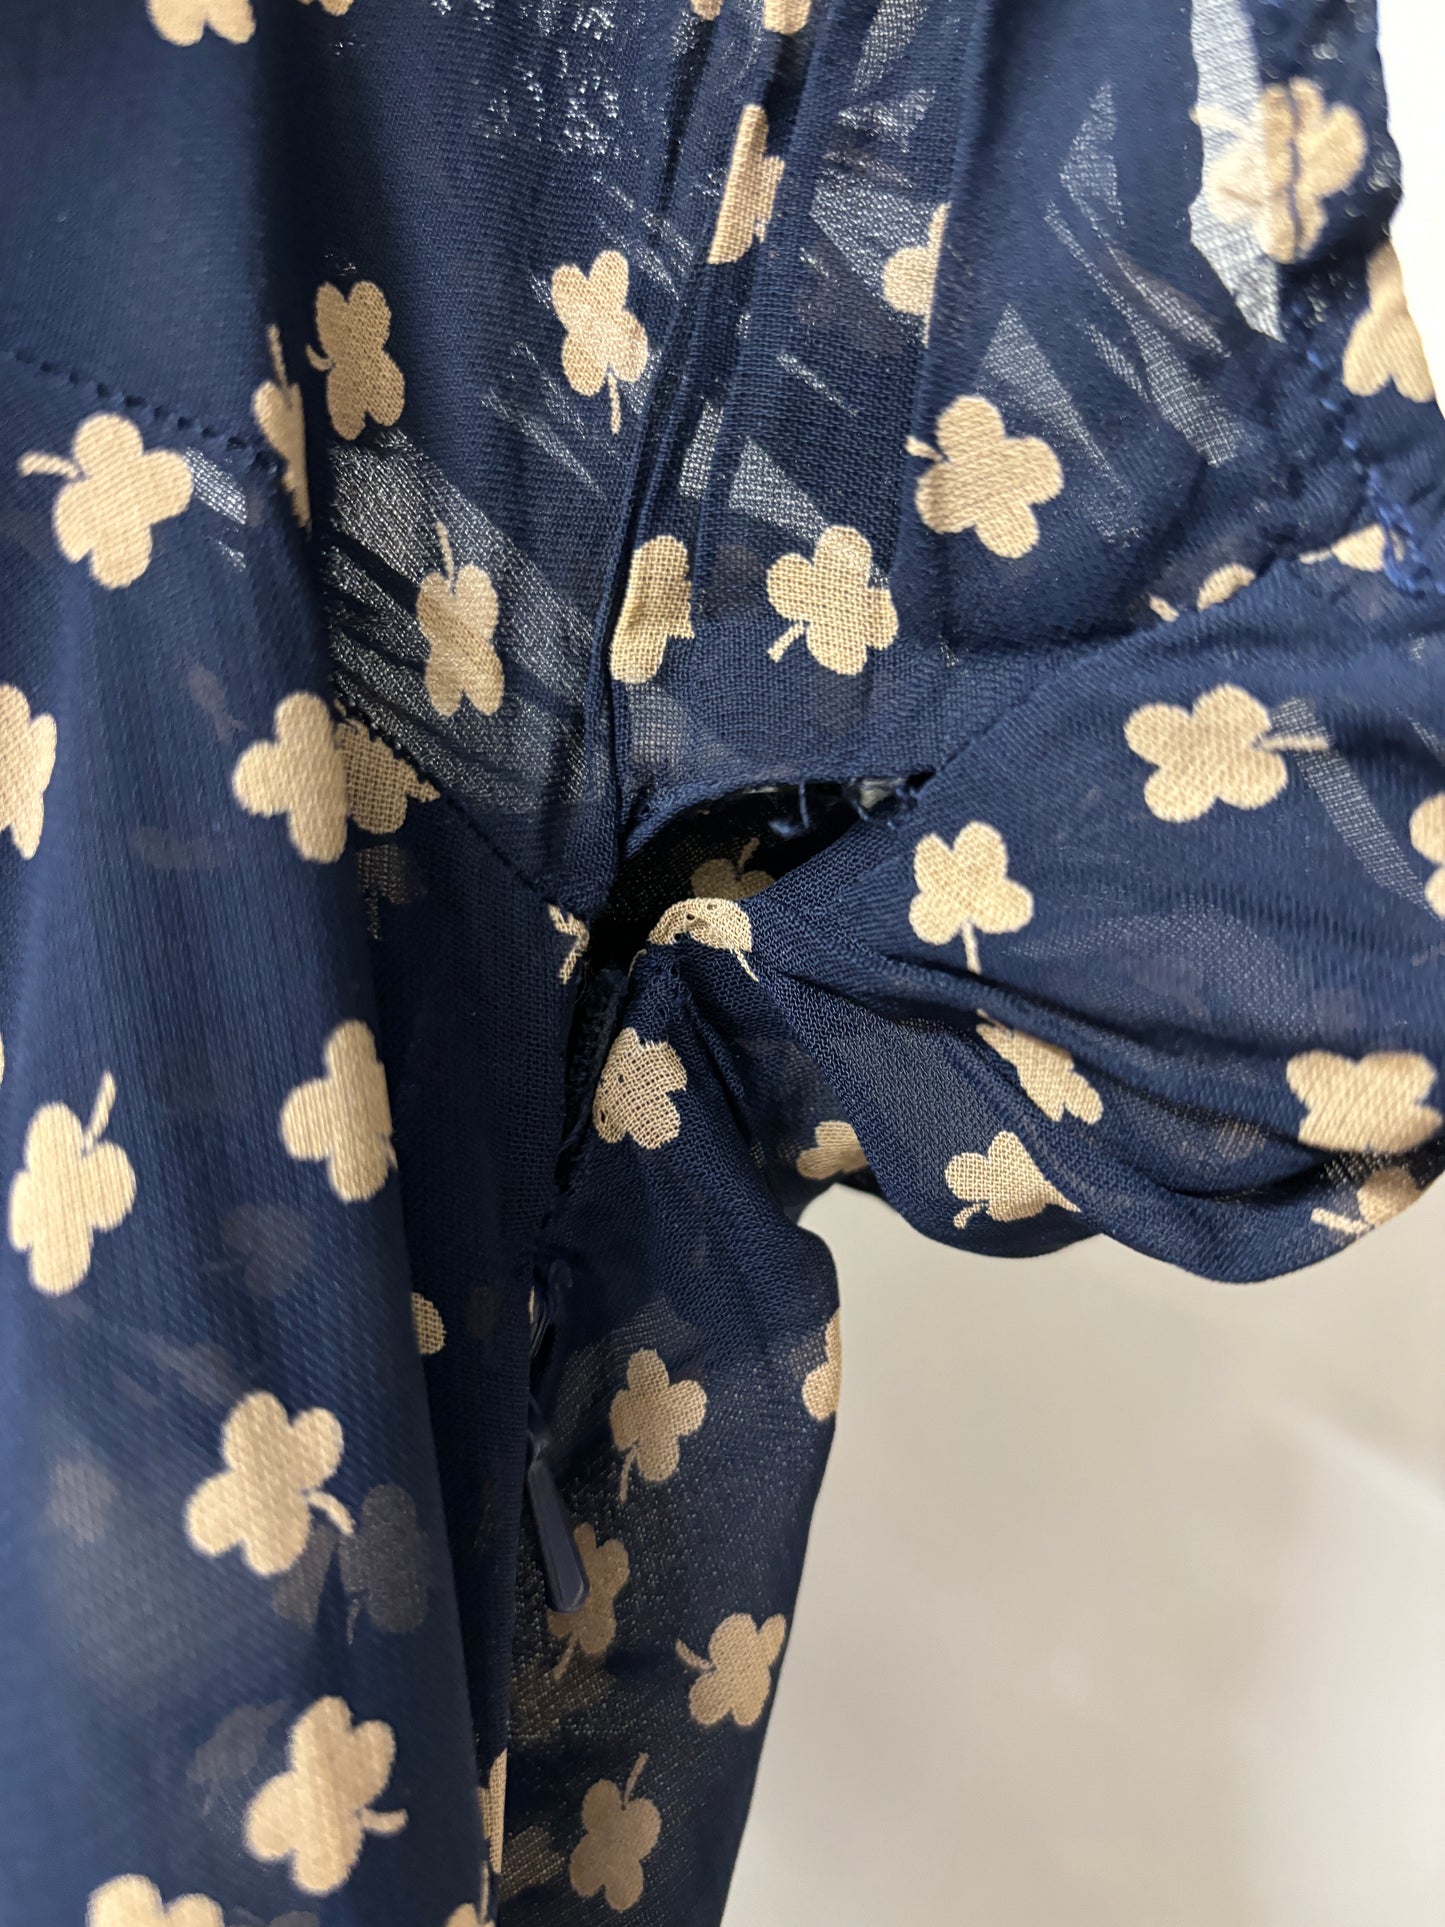 Topshop x Kate Moss Navy Clover Print Mini Dress 12